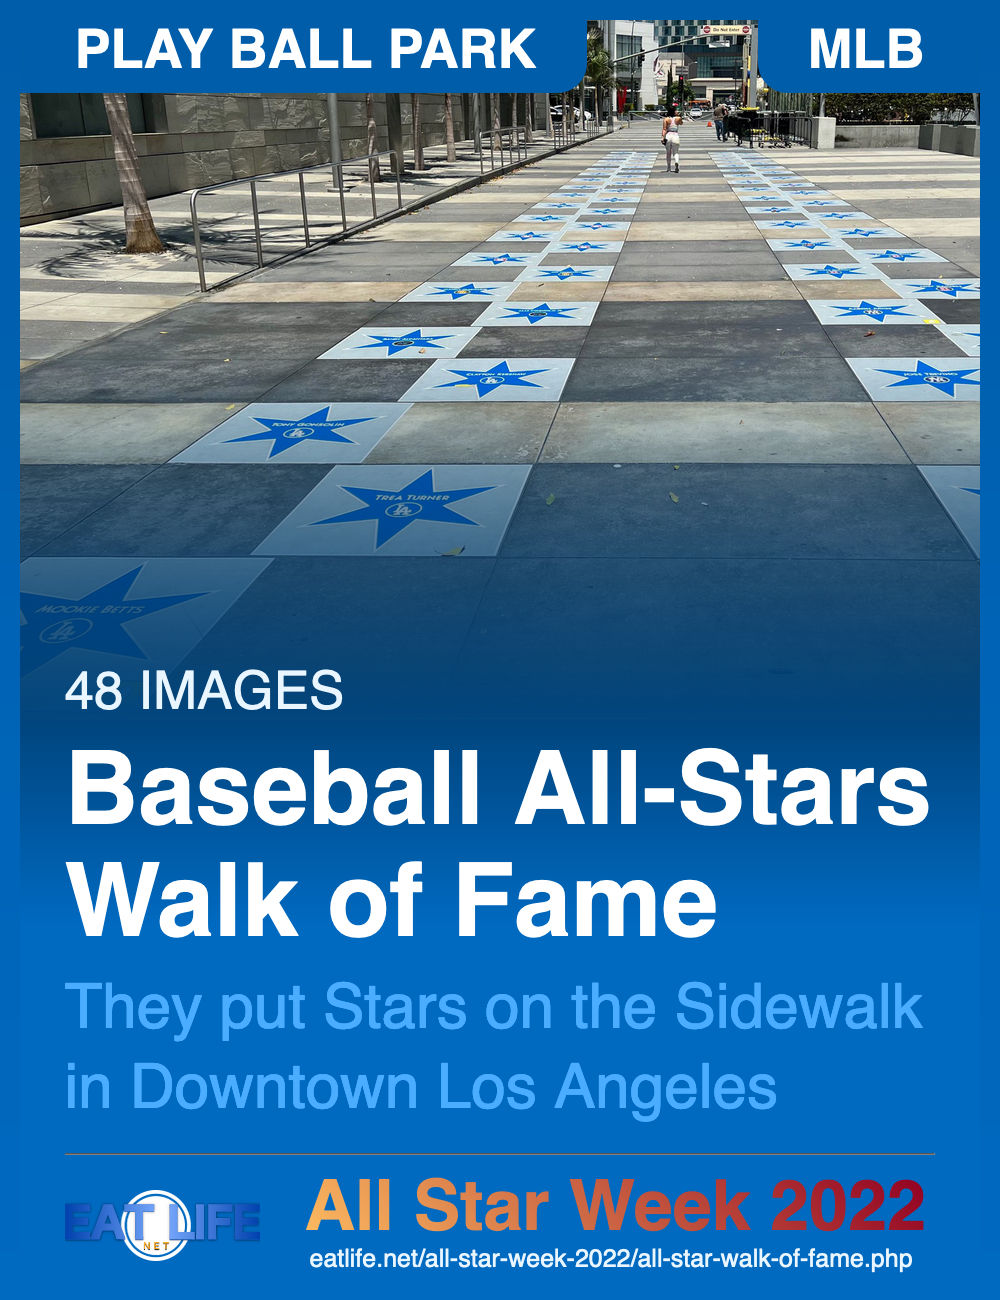 All Stars Walk of Fame